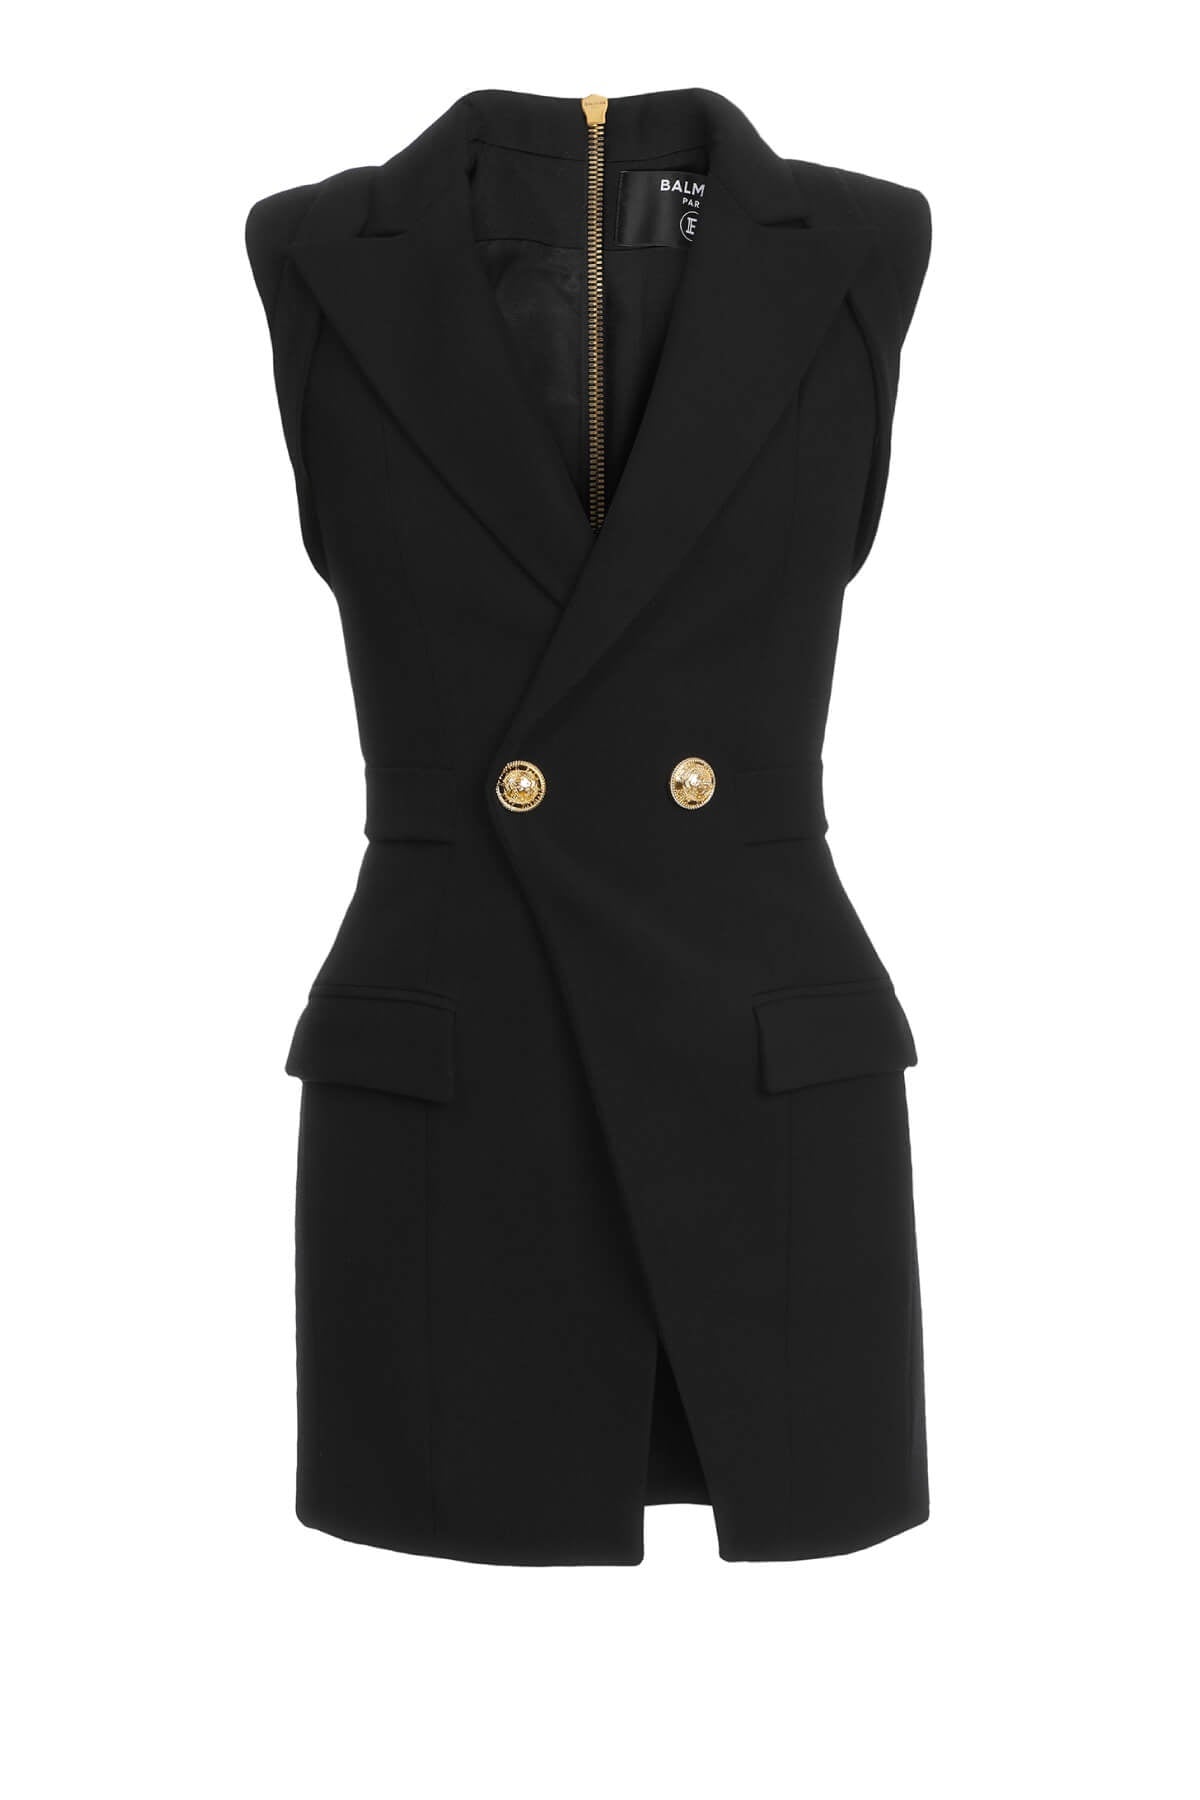 Balmain Sleeveless Button Embellished Dress - Black